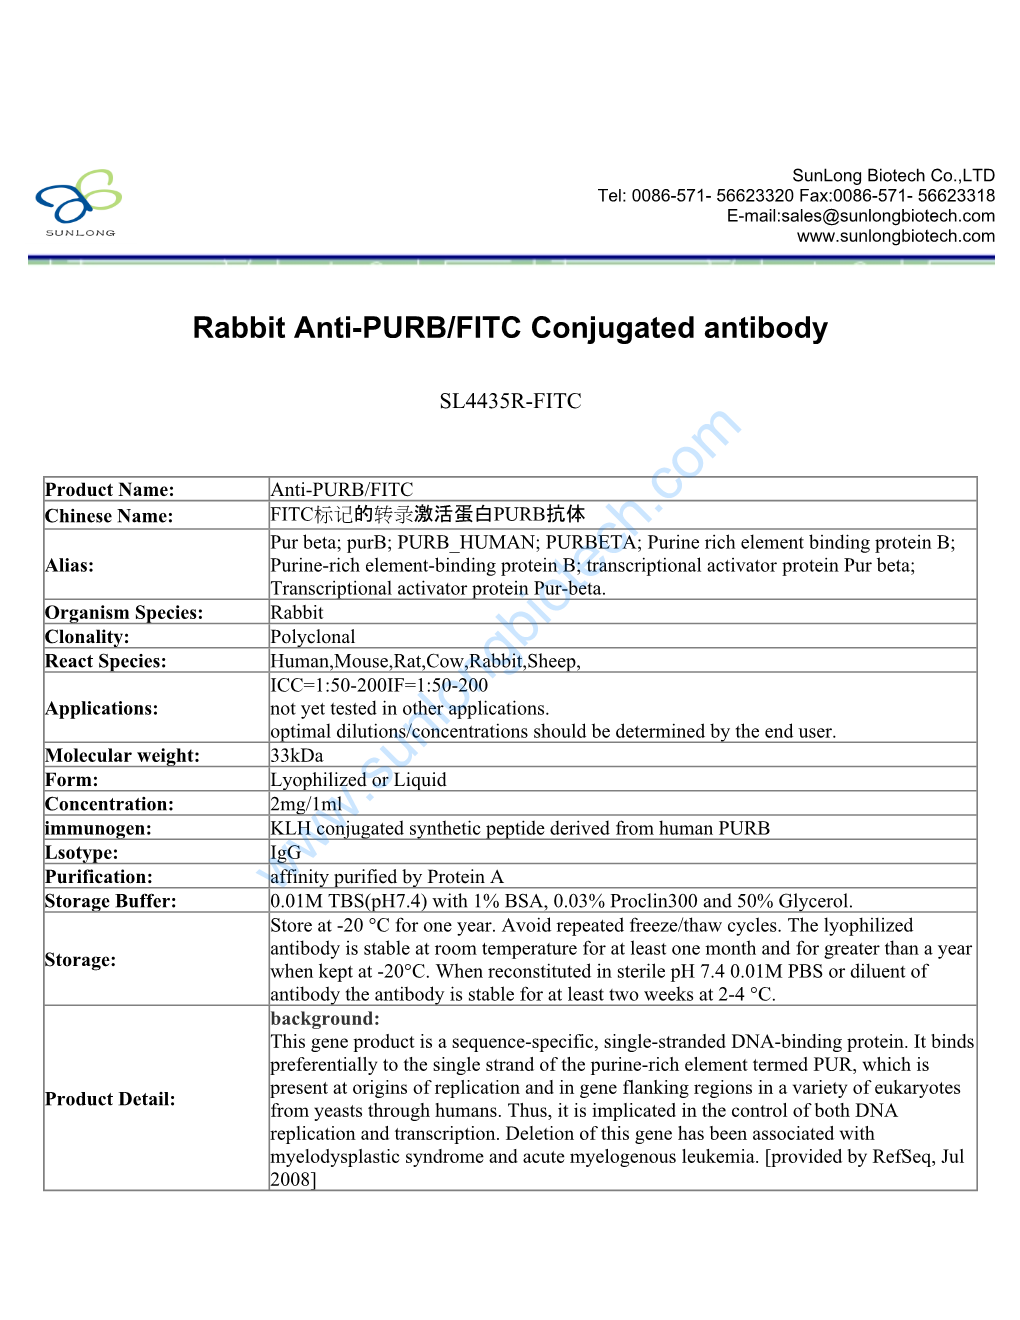 Rabbit Anti-PURB/FITC Conjugated Antibody